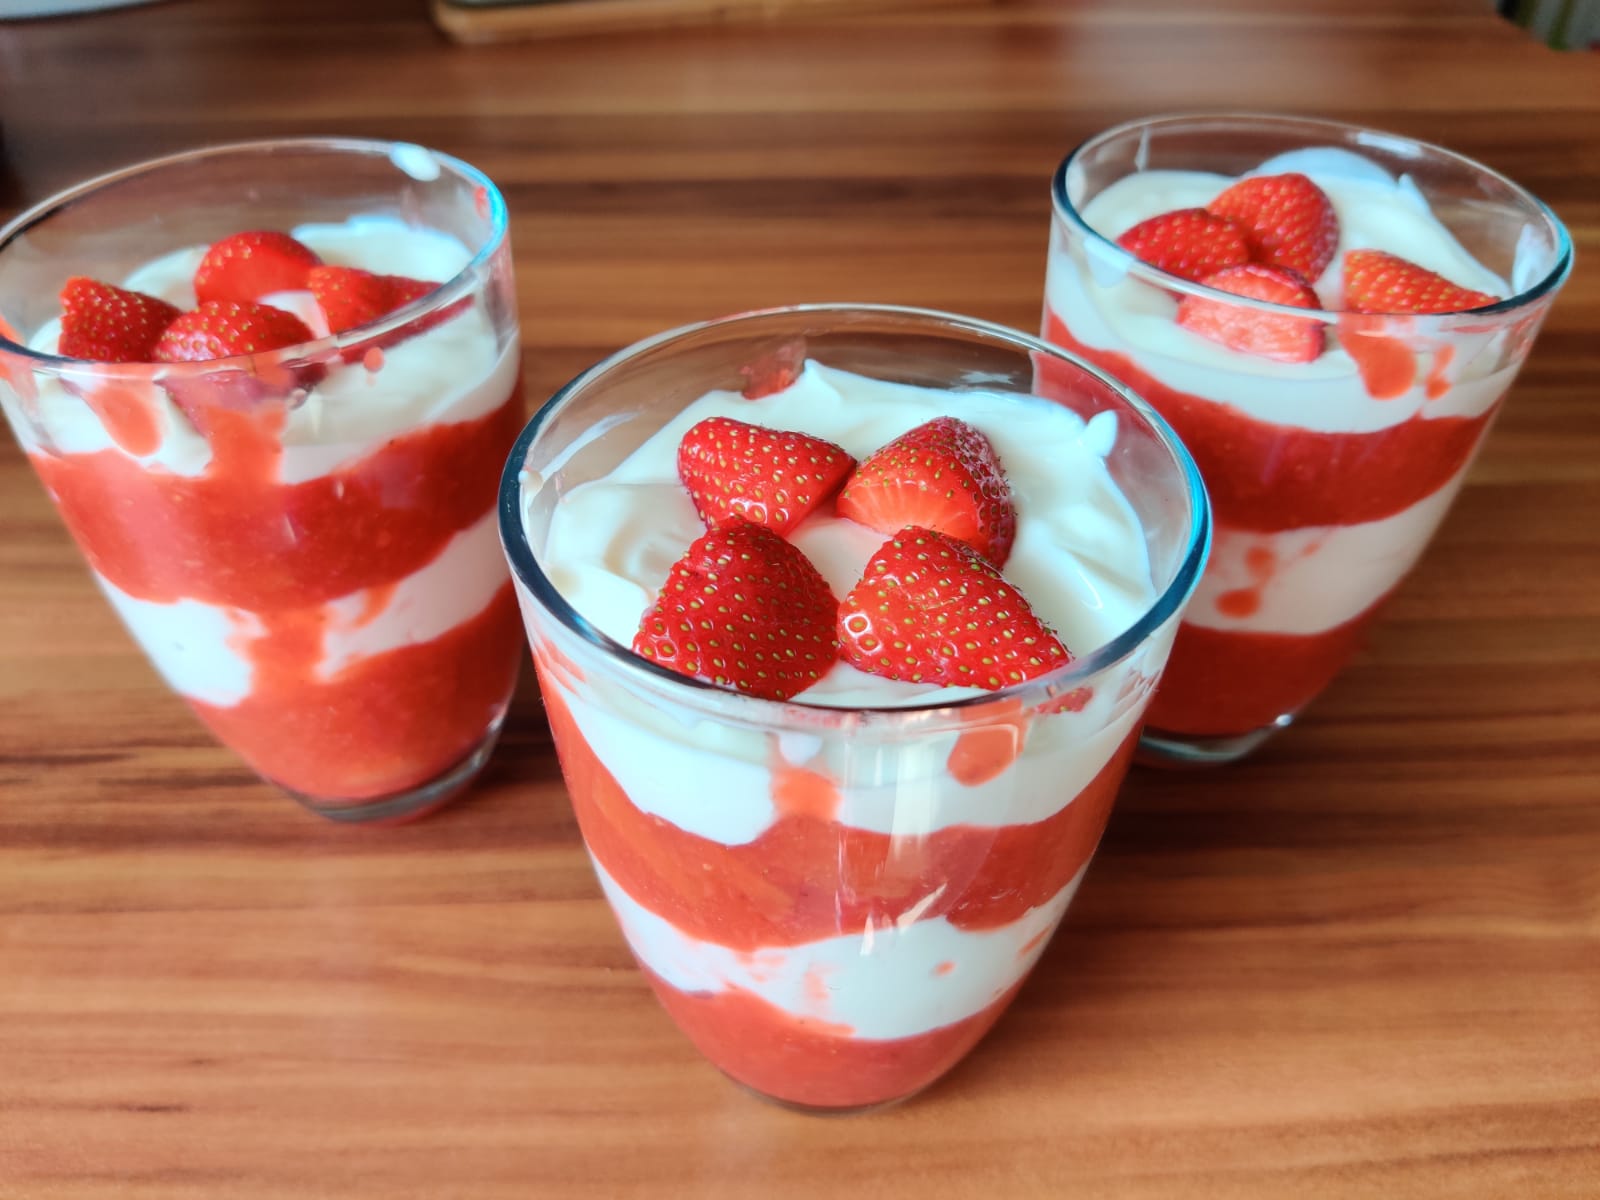 Rhabarber-Erdbeer-Kompott mit Joghurt - Bidilis-Welt